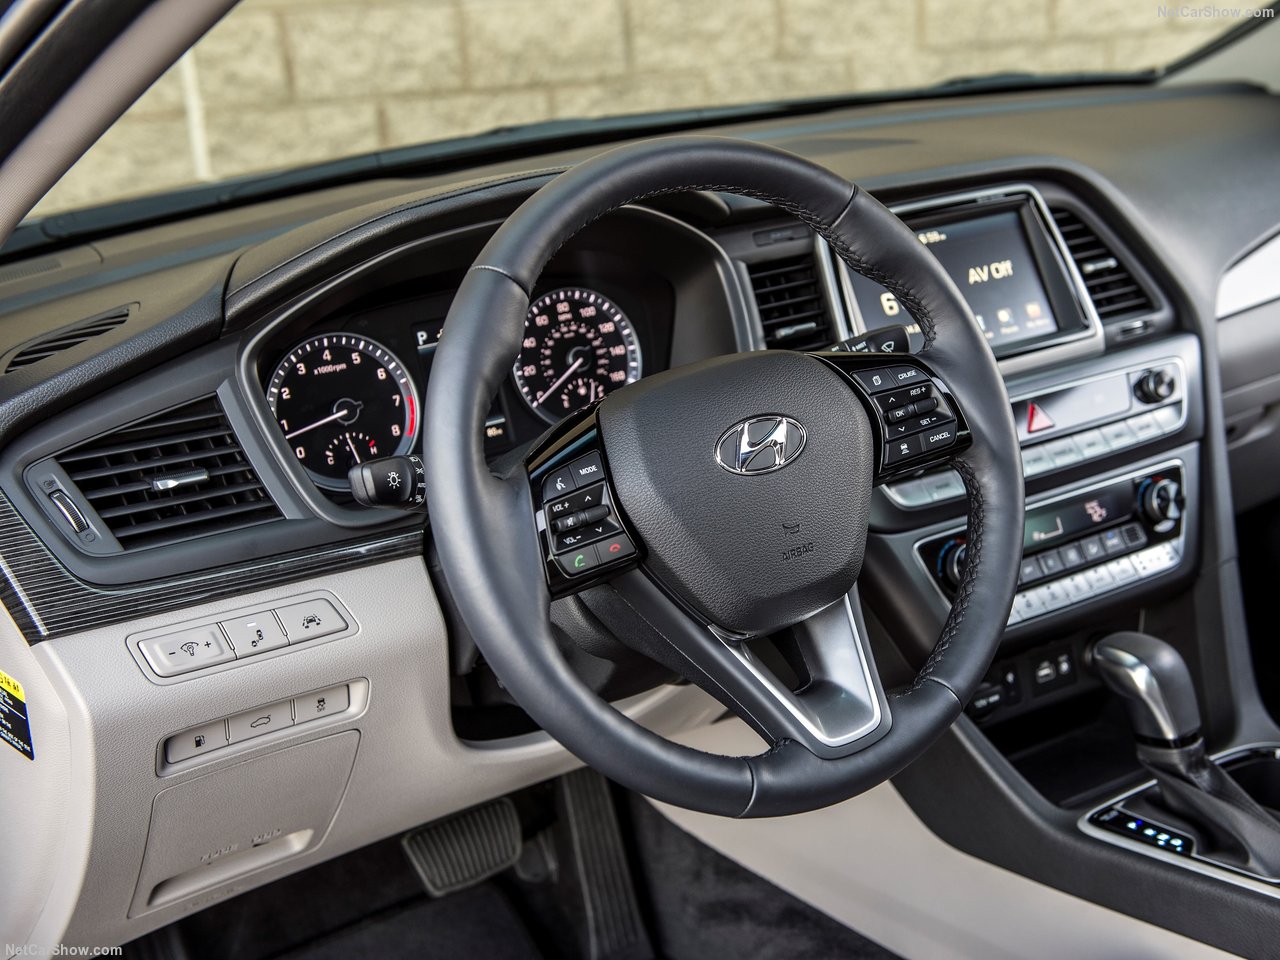 Hyundai Sonata interior view